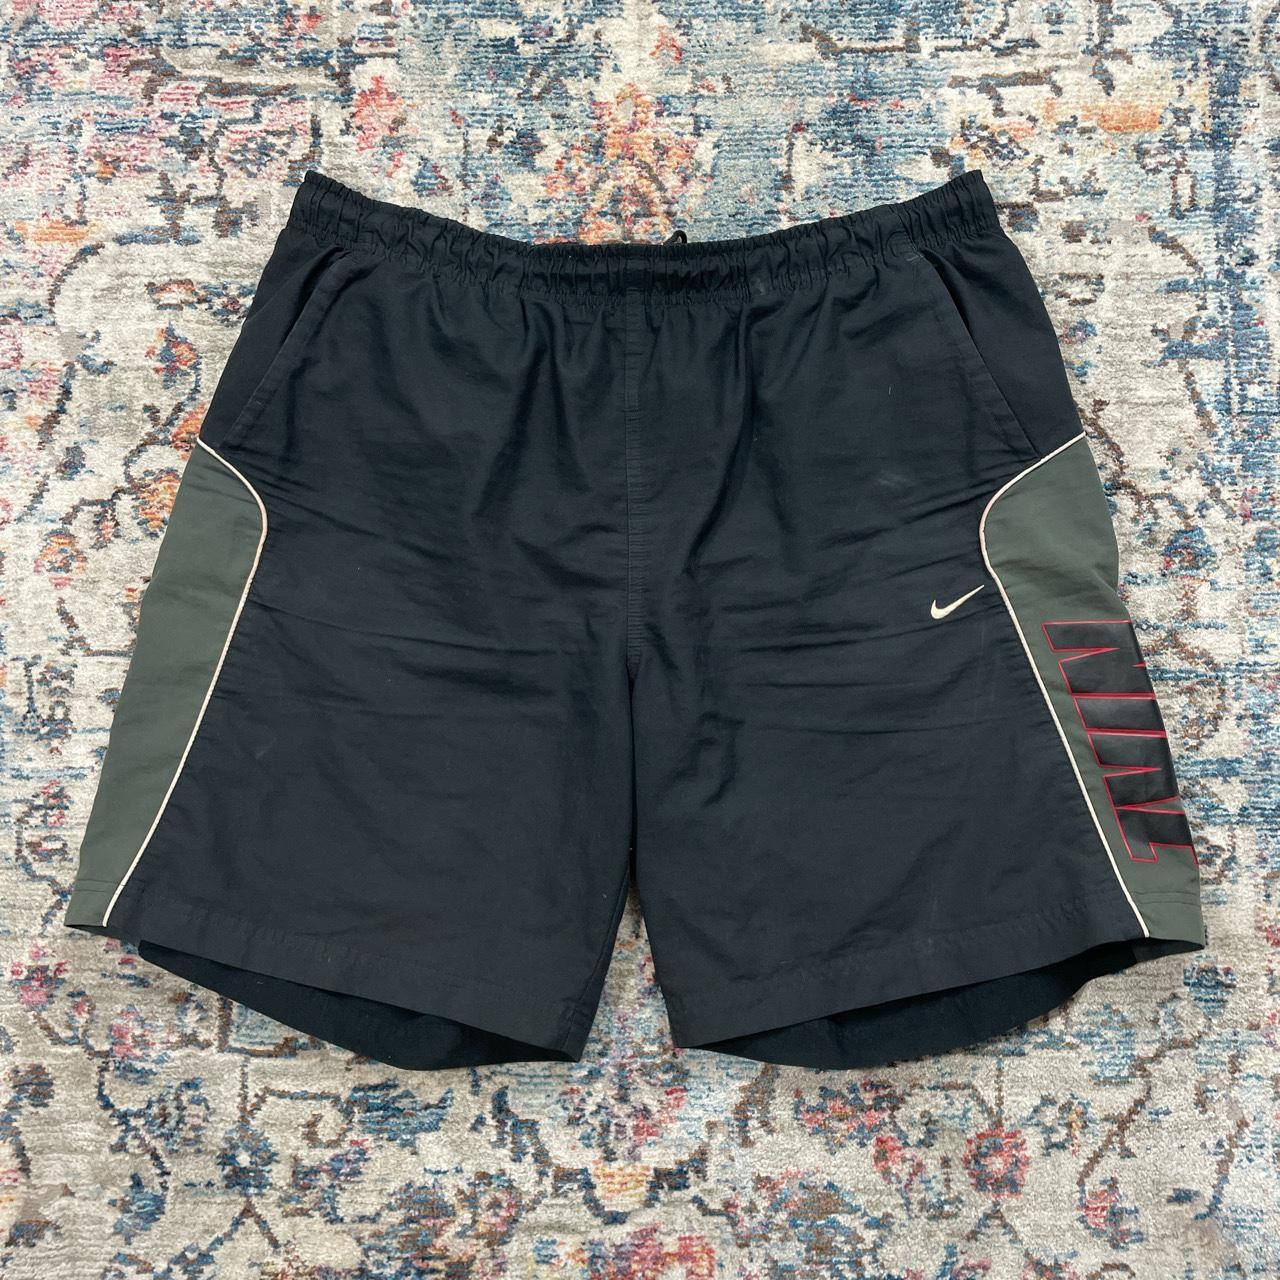 Vintage Nike black shorts